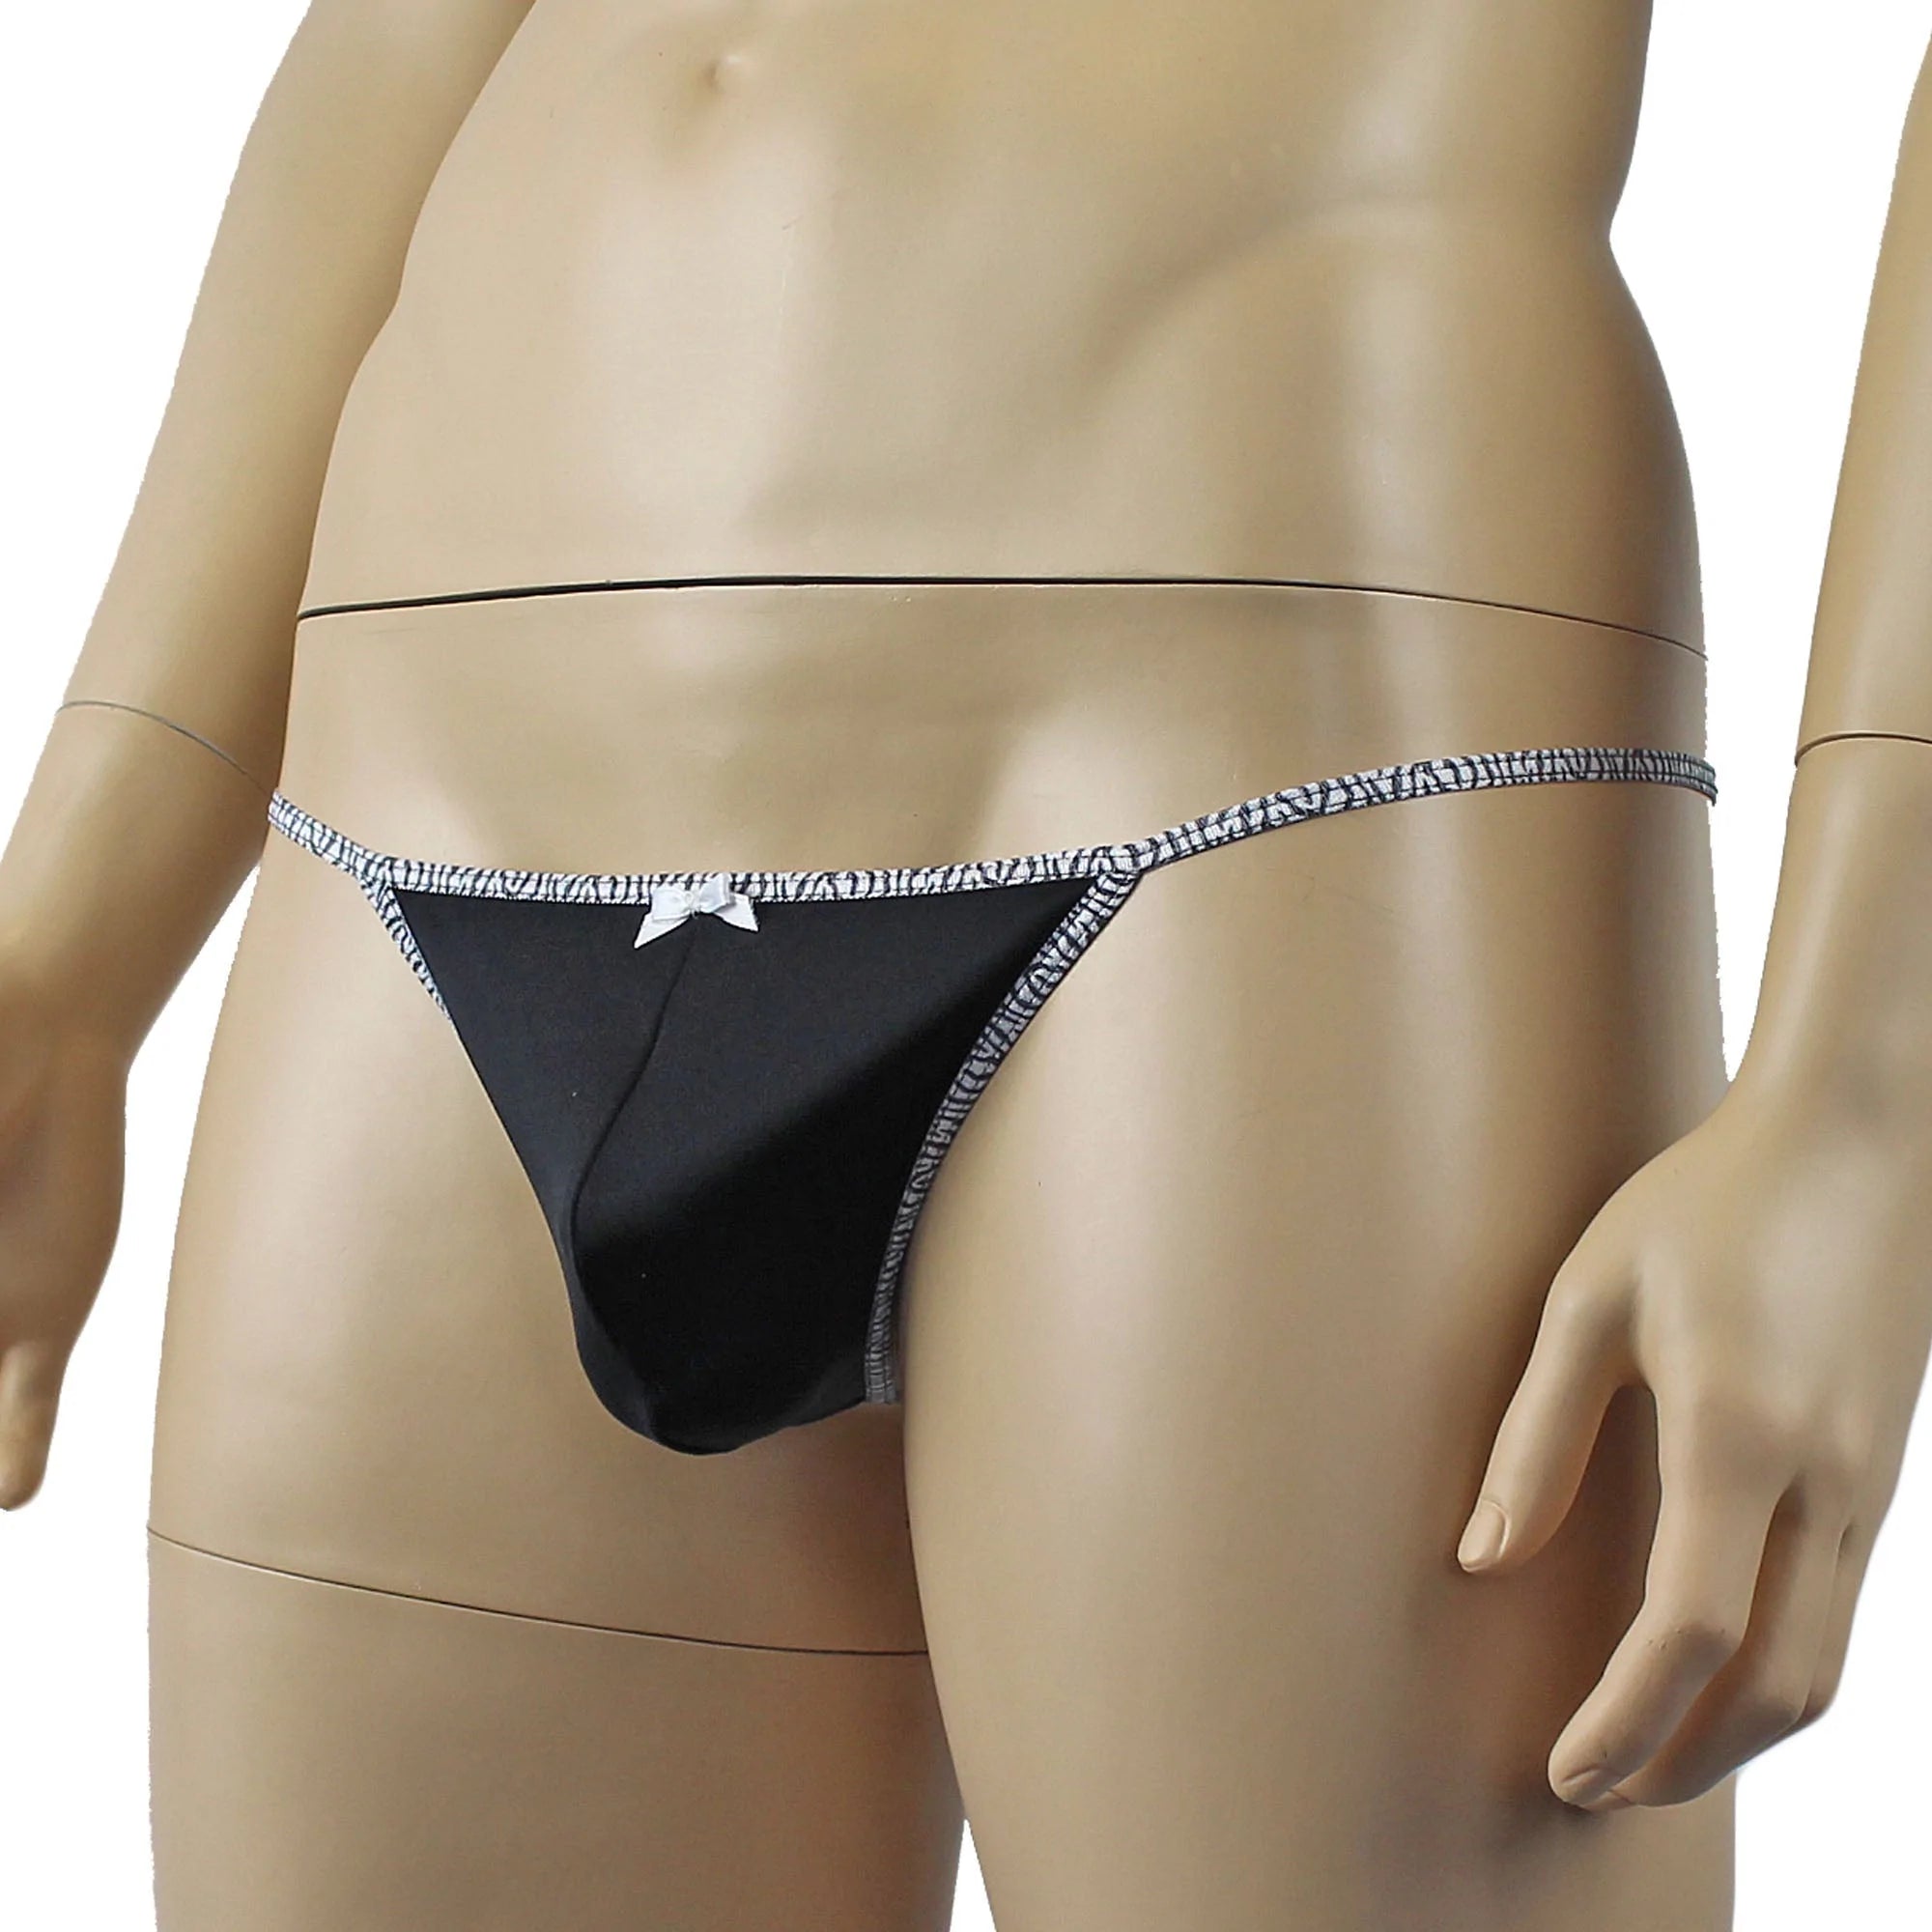 SALE - Mens Pretty Lycra G string Underwear with Zebra trim & Bow Black